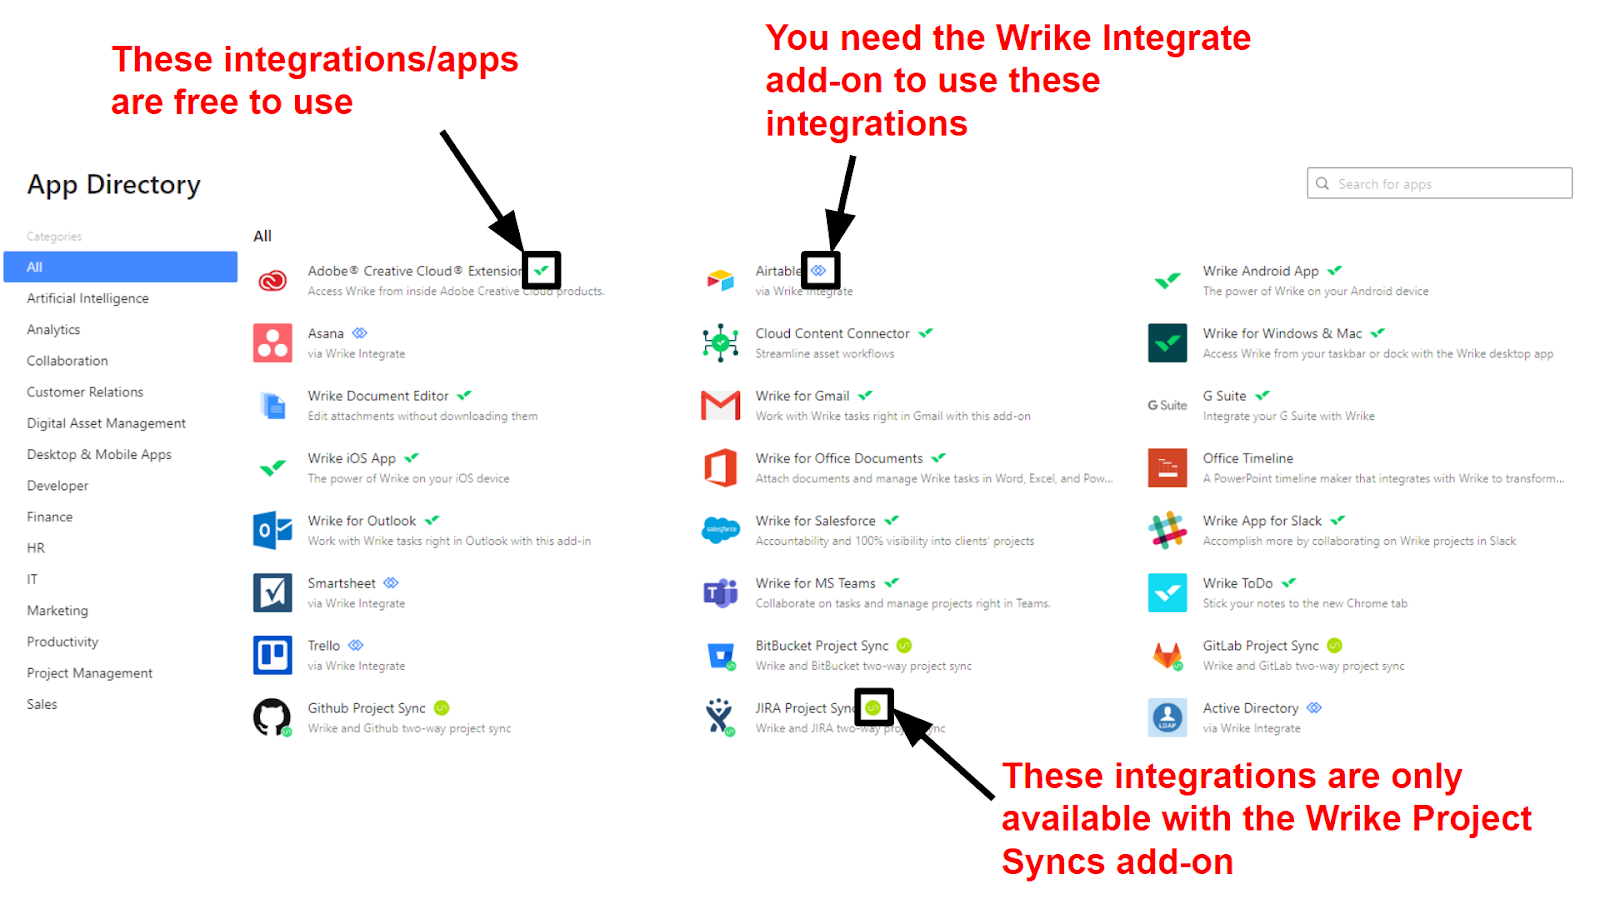 Wrike's integrations list